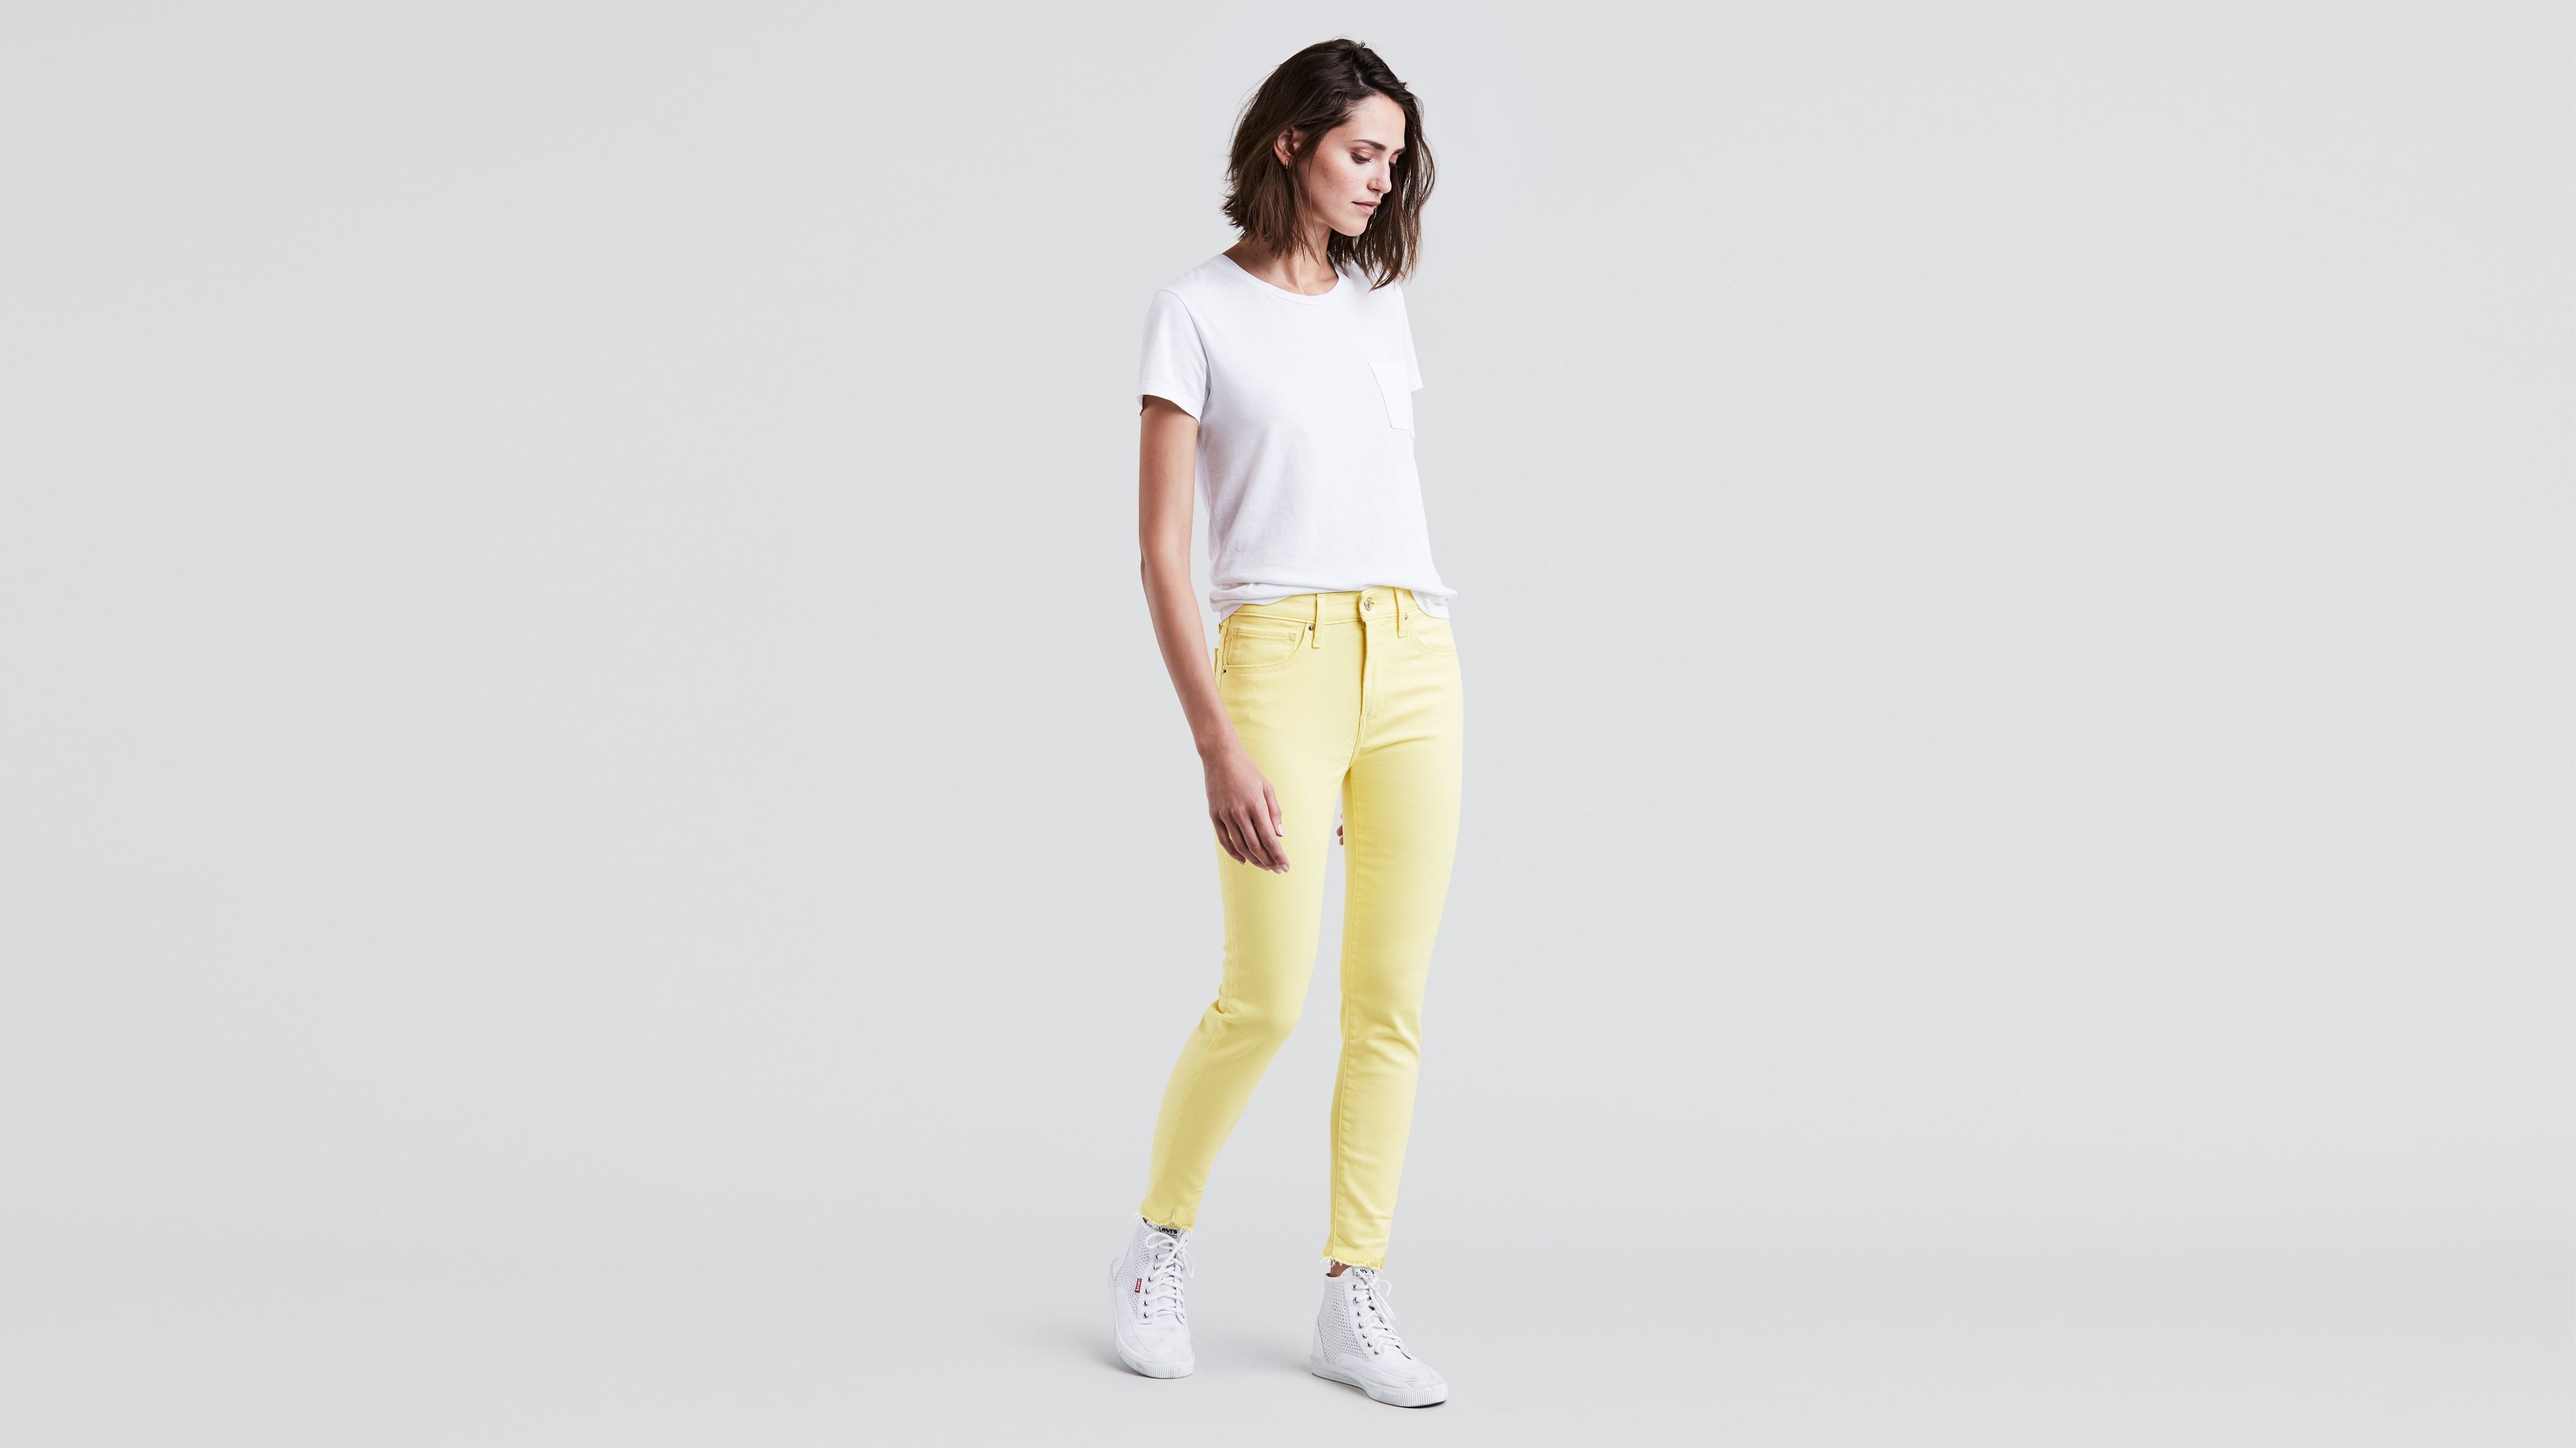 yellow levi jeans